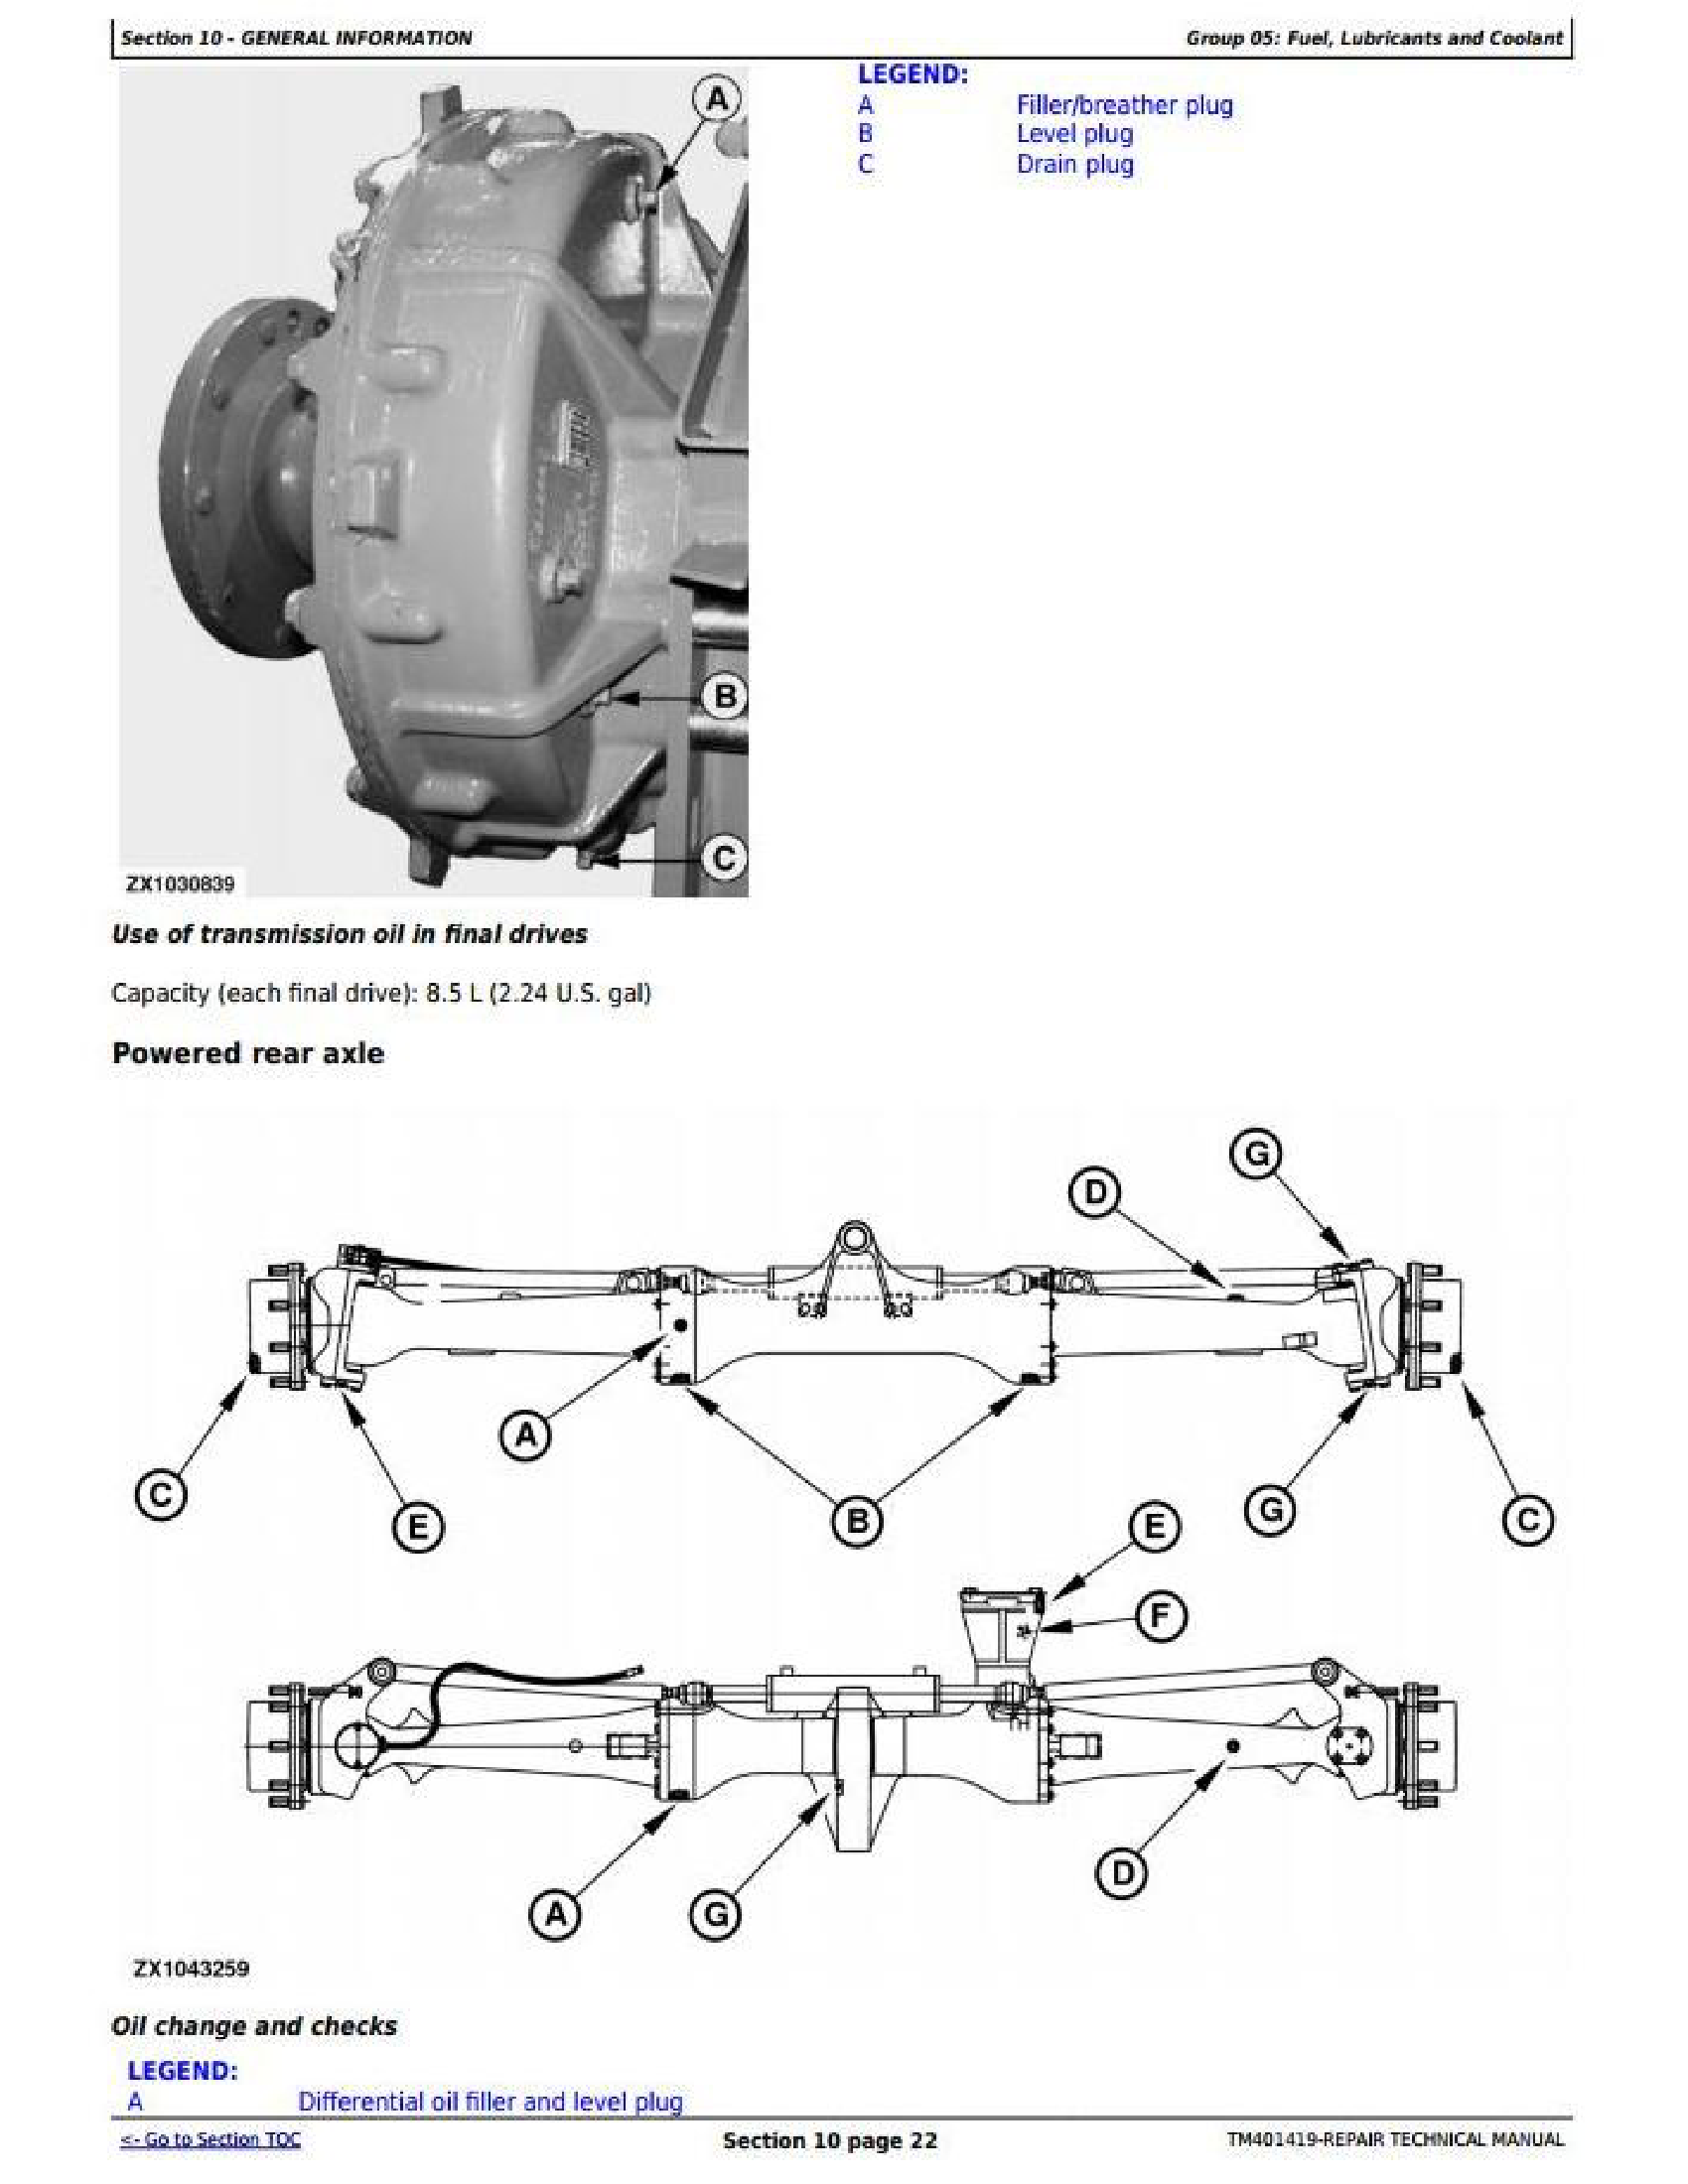 John Deere 1DW524K manual pdf